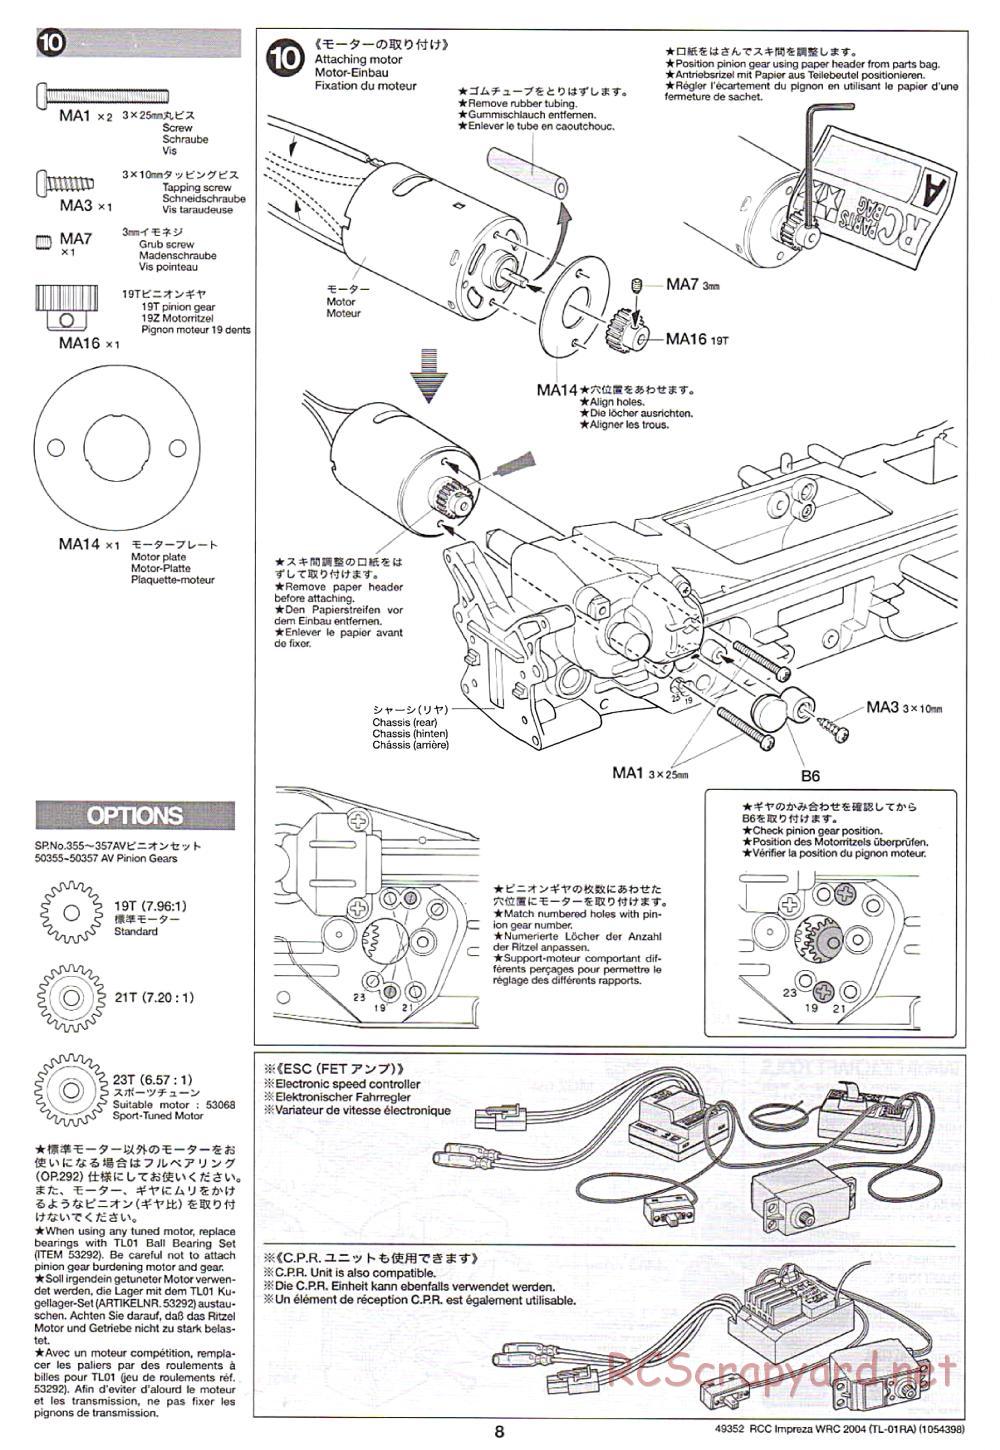 Tamiya - Subaru Impreza WRC 2004 Chassis - Manual - Page 8